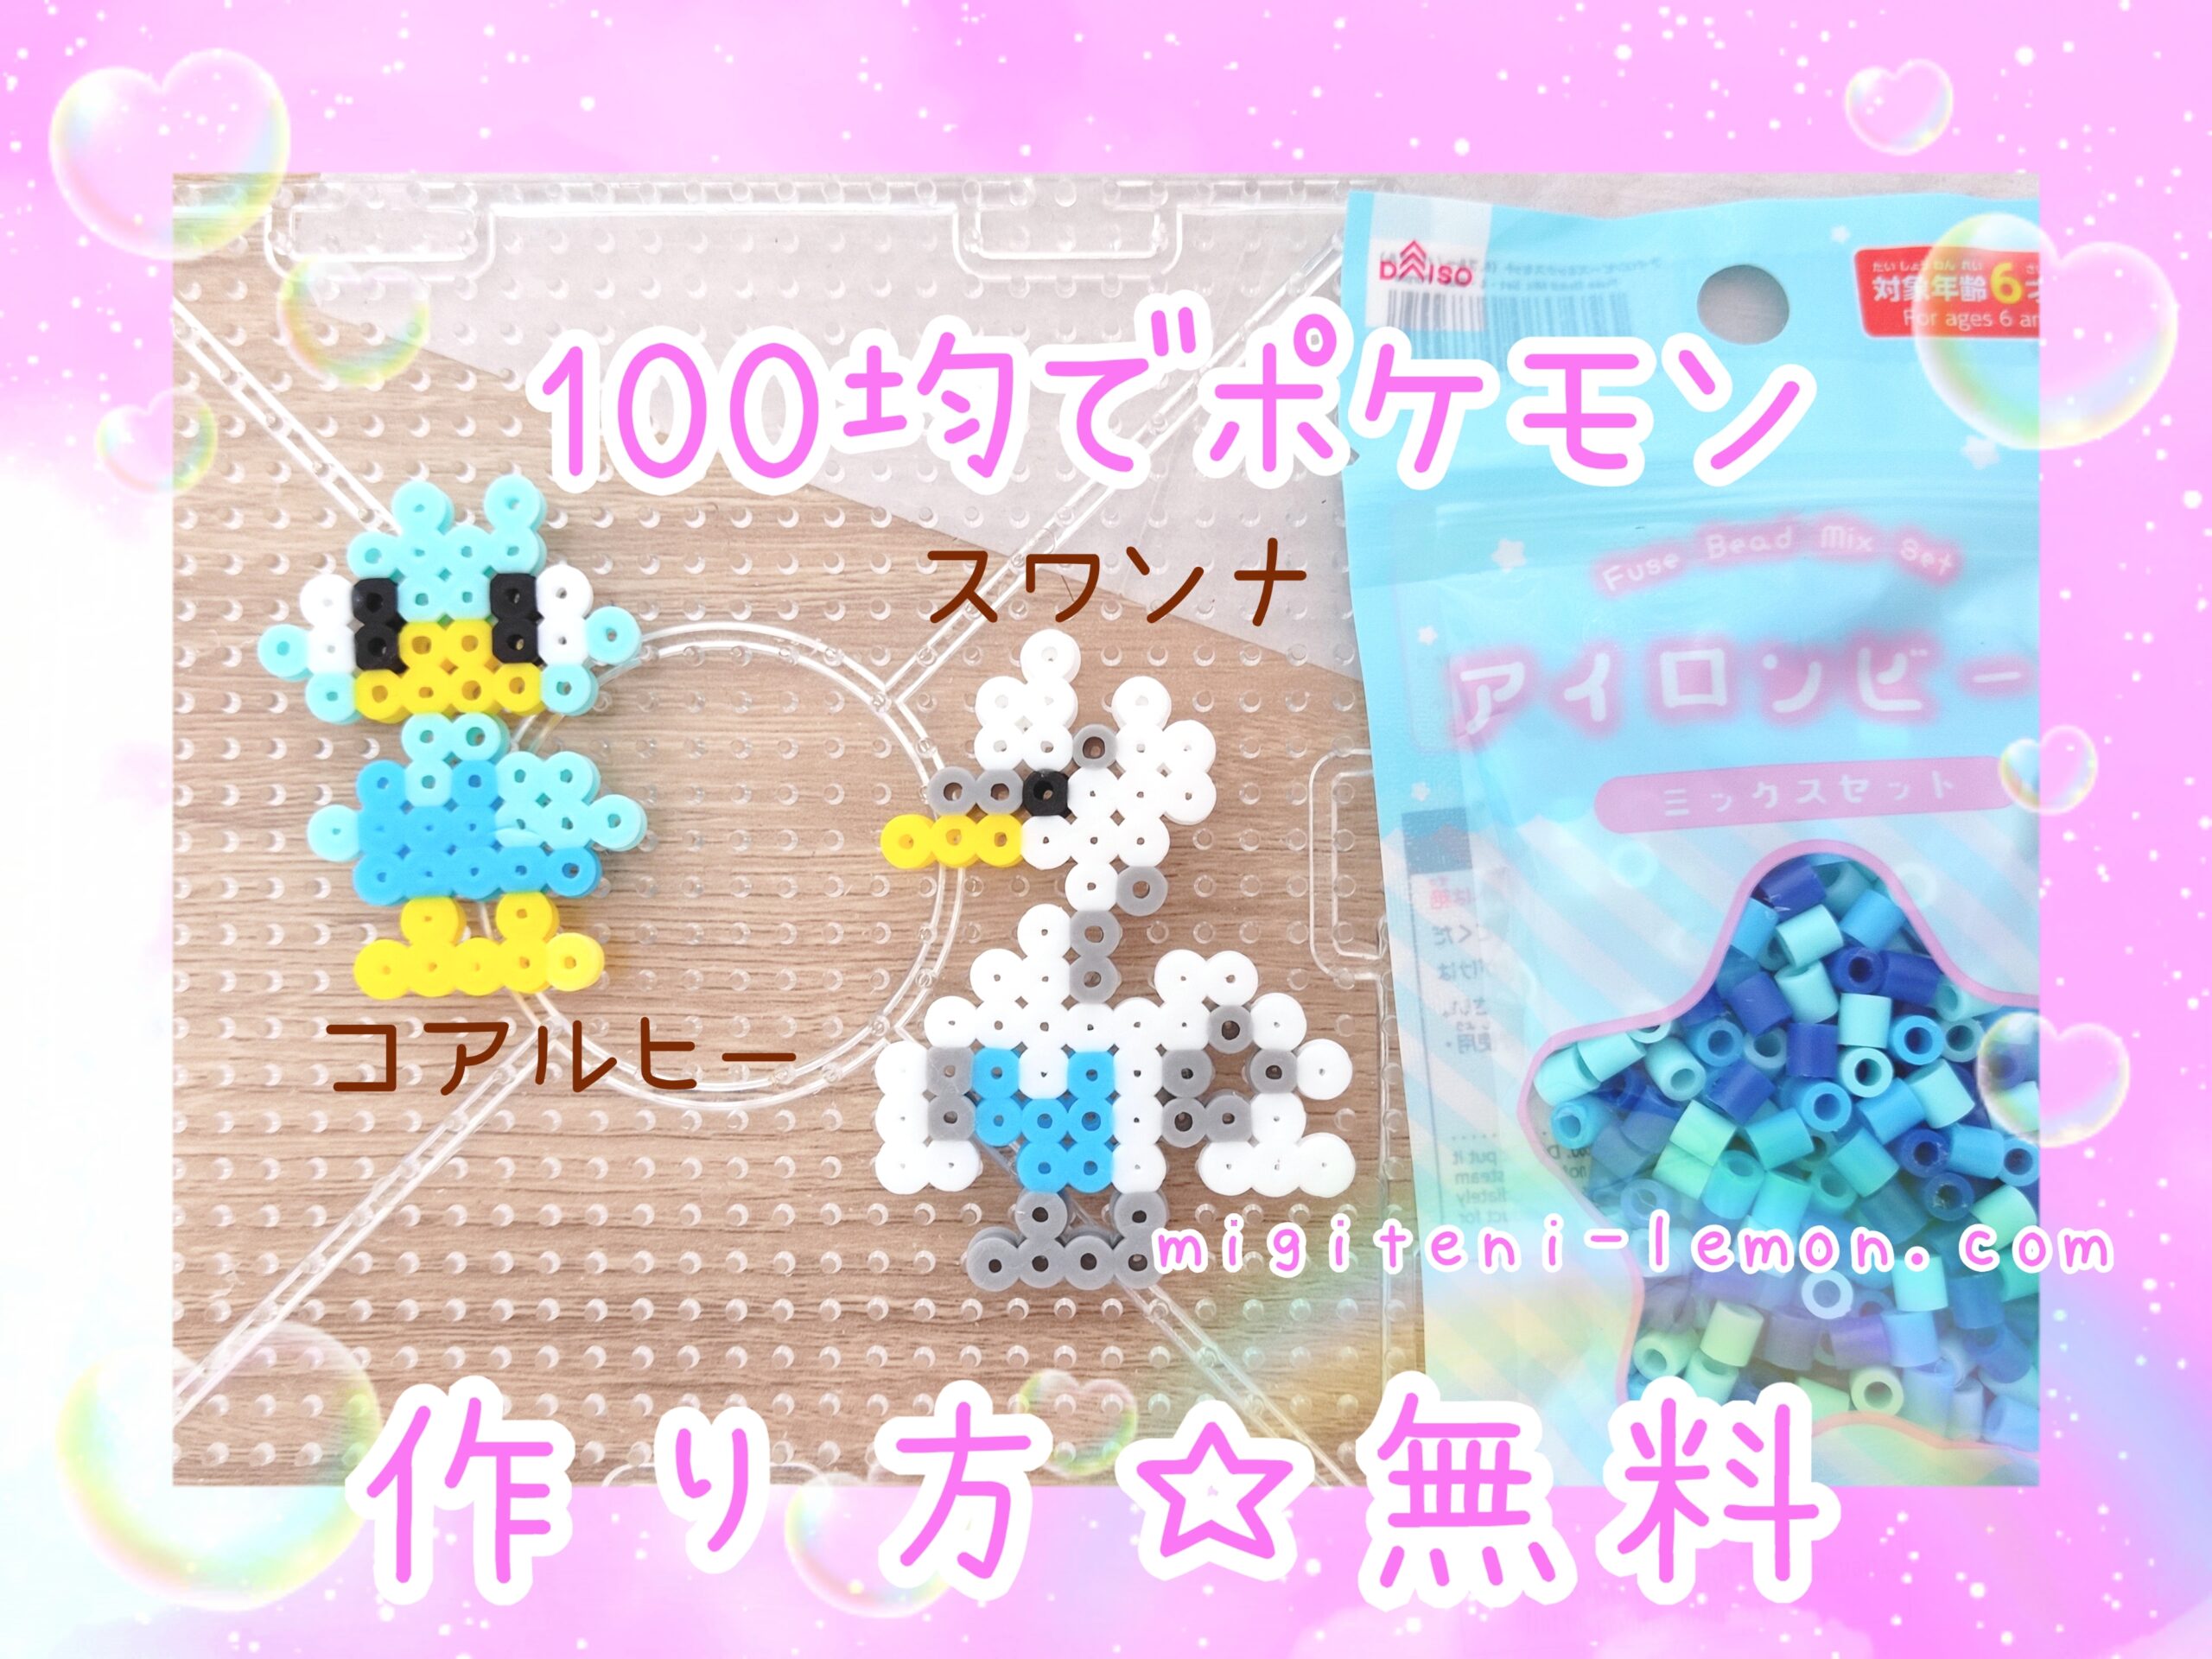 koaruhie-ducklett-swanna-free-pokemon-beads-zuan